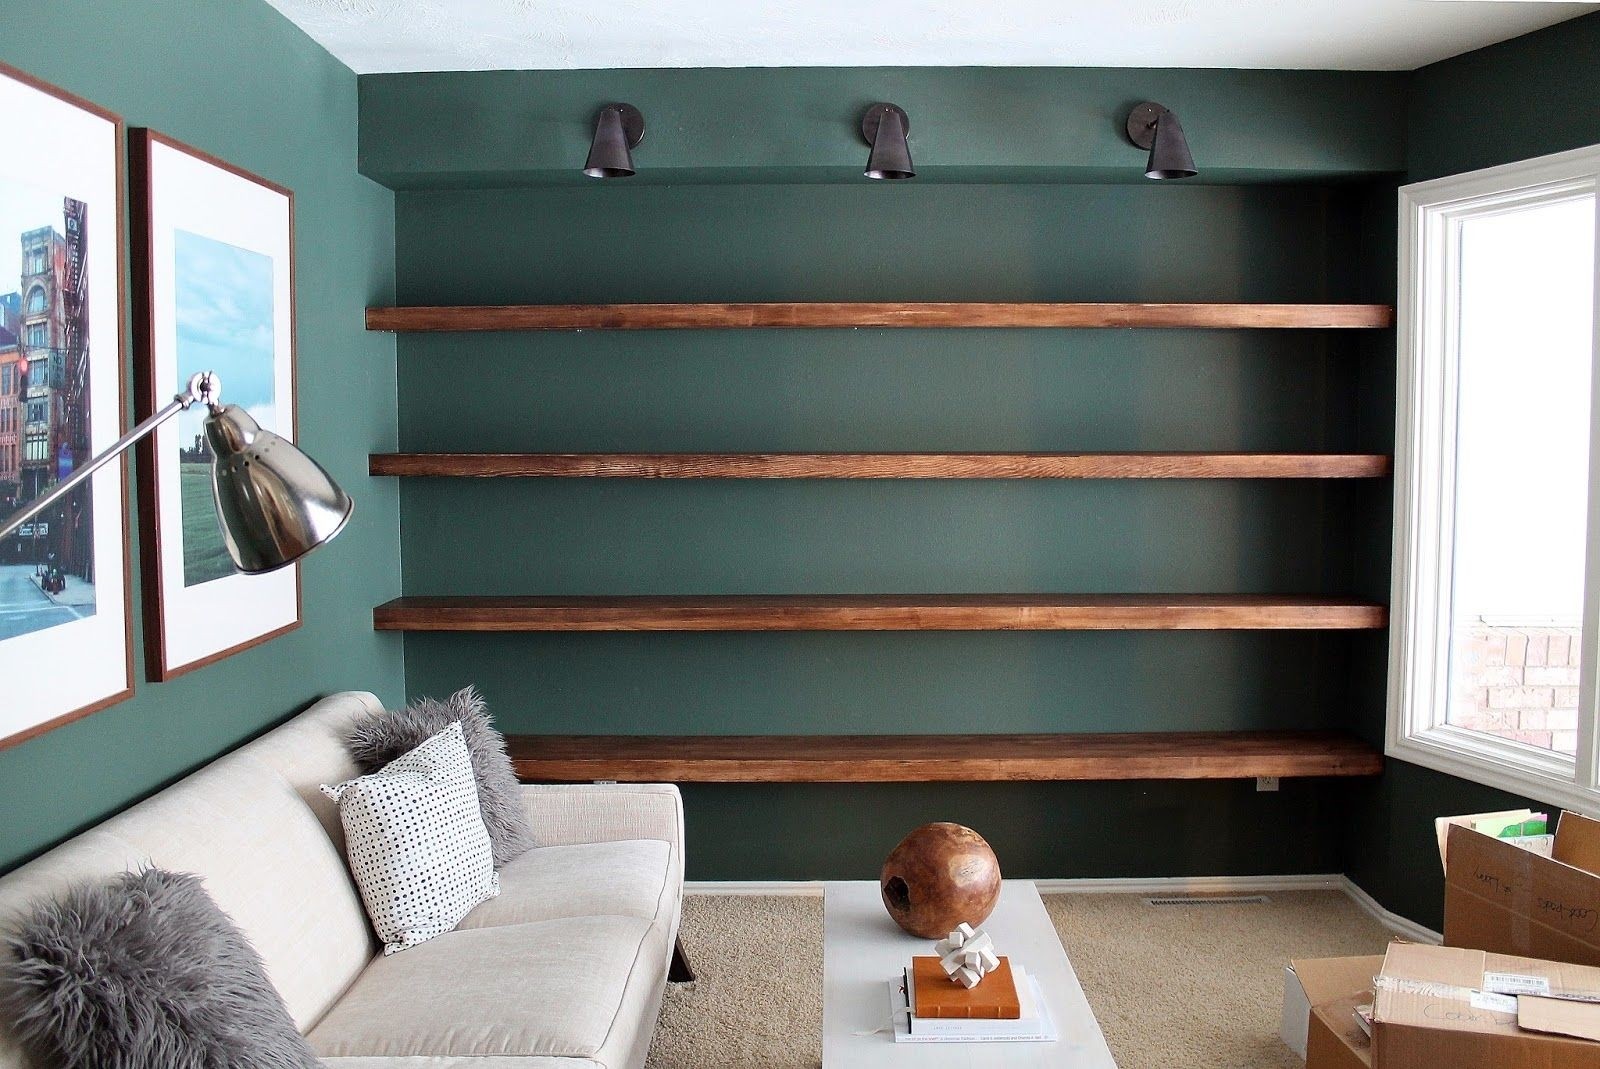 Living room wall shelves